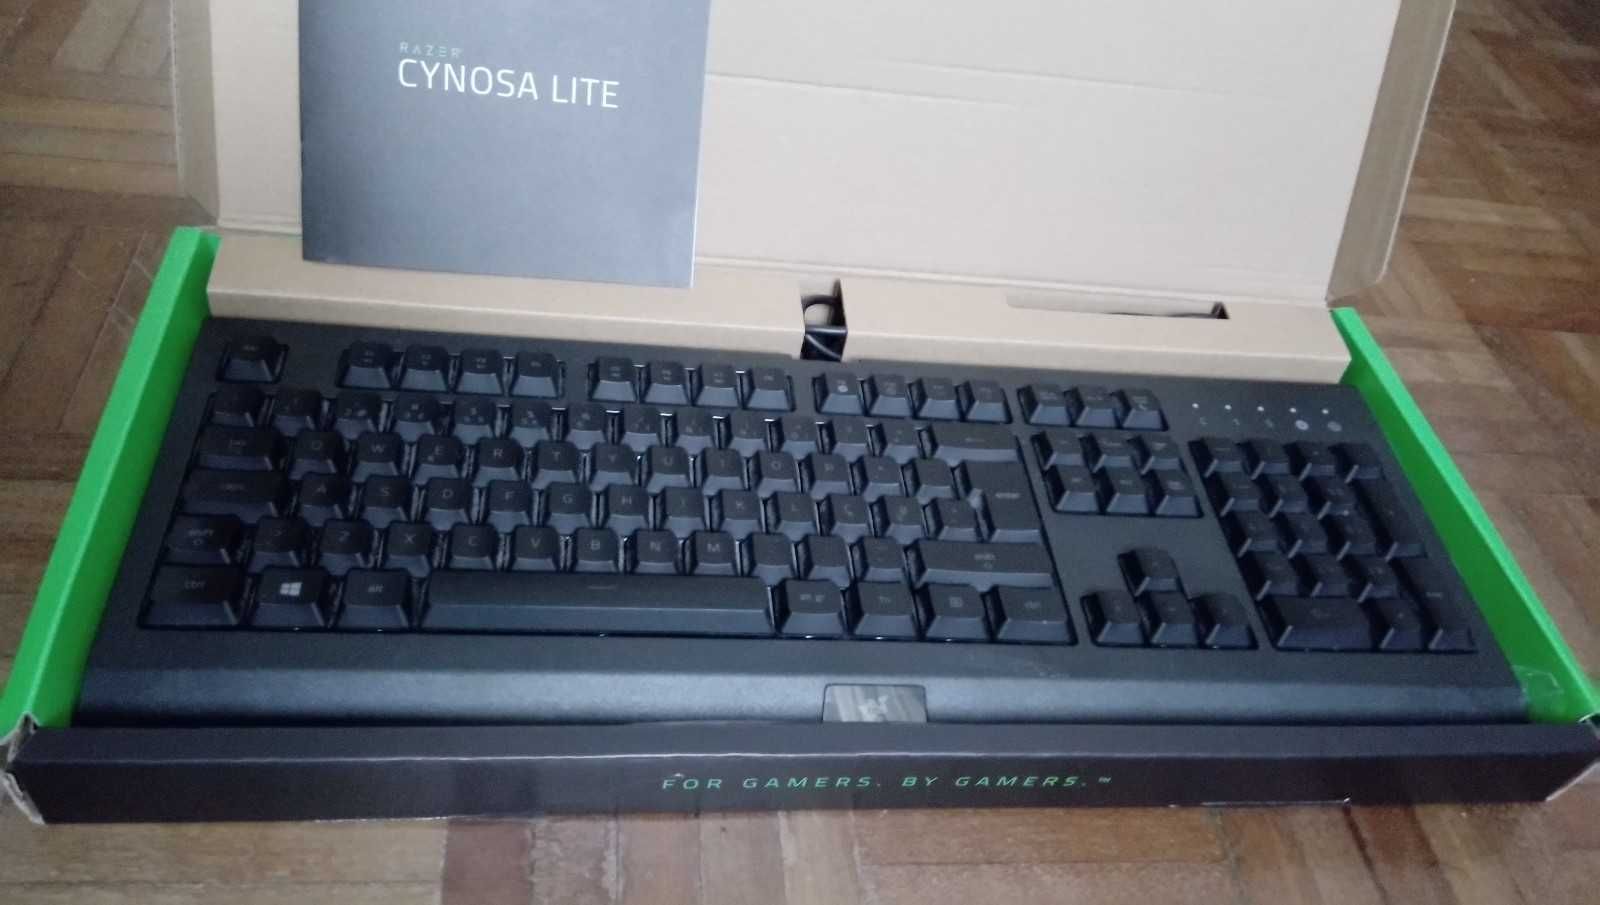 Teclado/keyboard gaming (Razer)